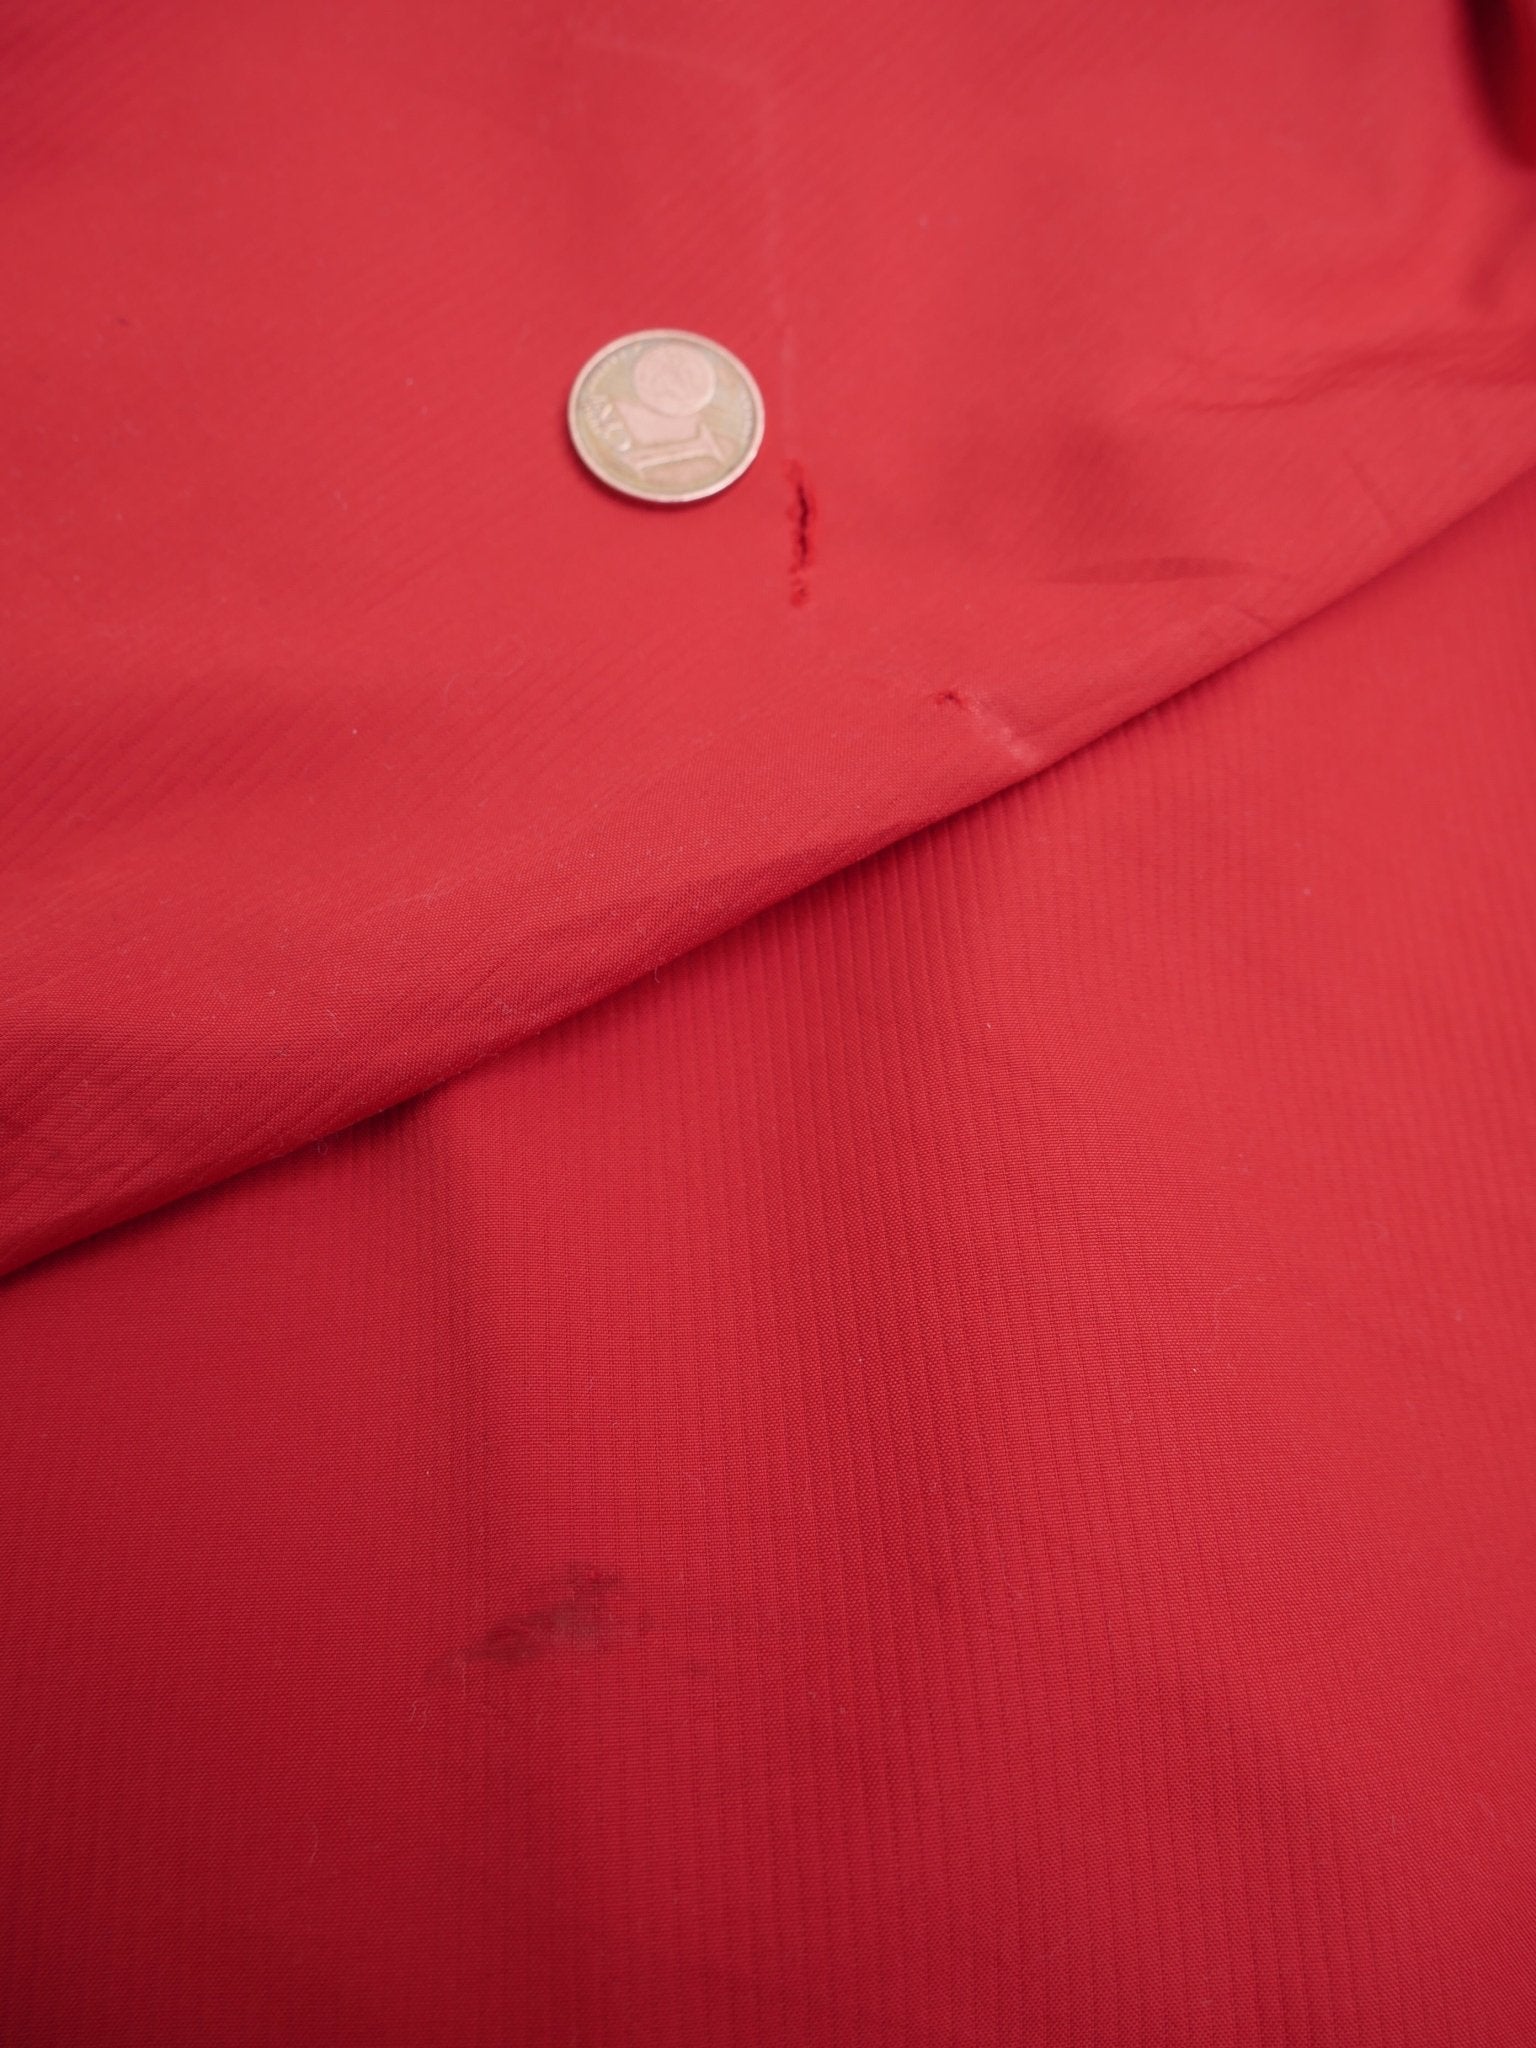 Nike Ohio State embroidered Swoosh red Windbreaker - Peeces